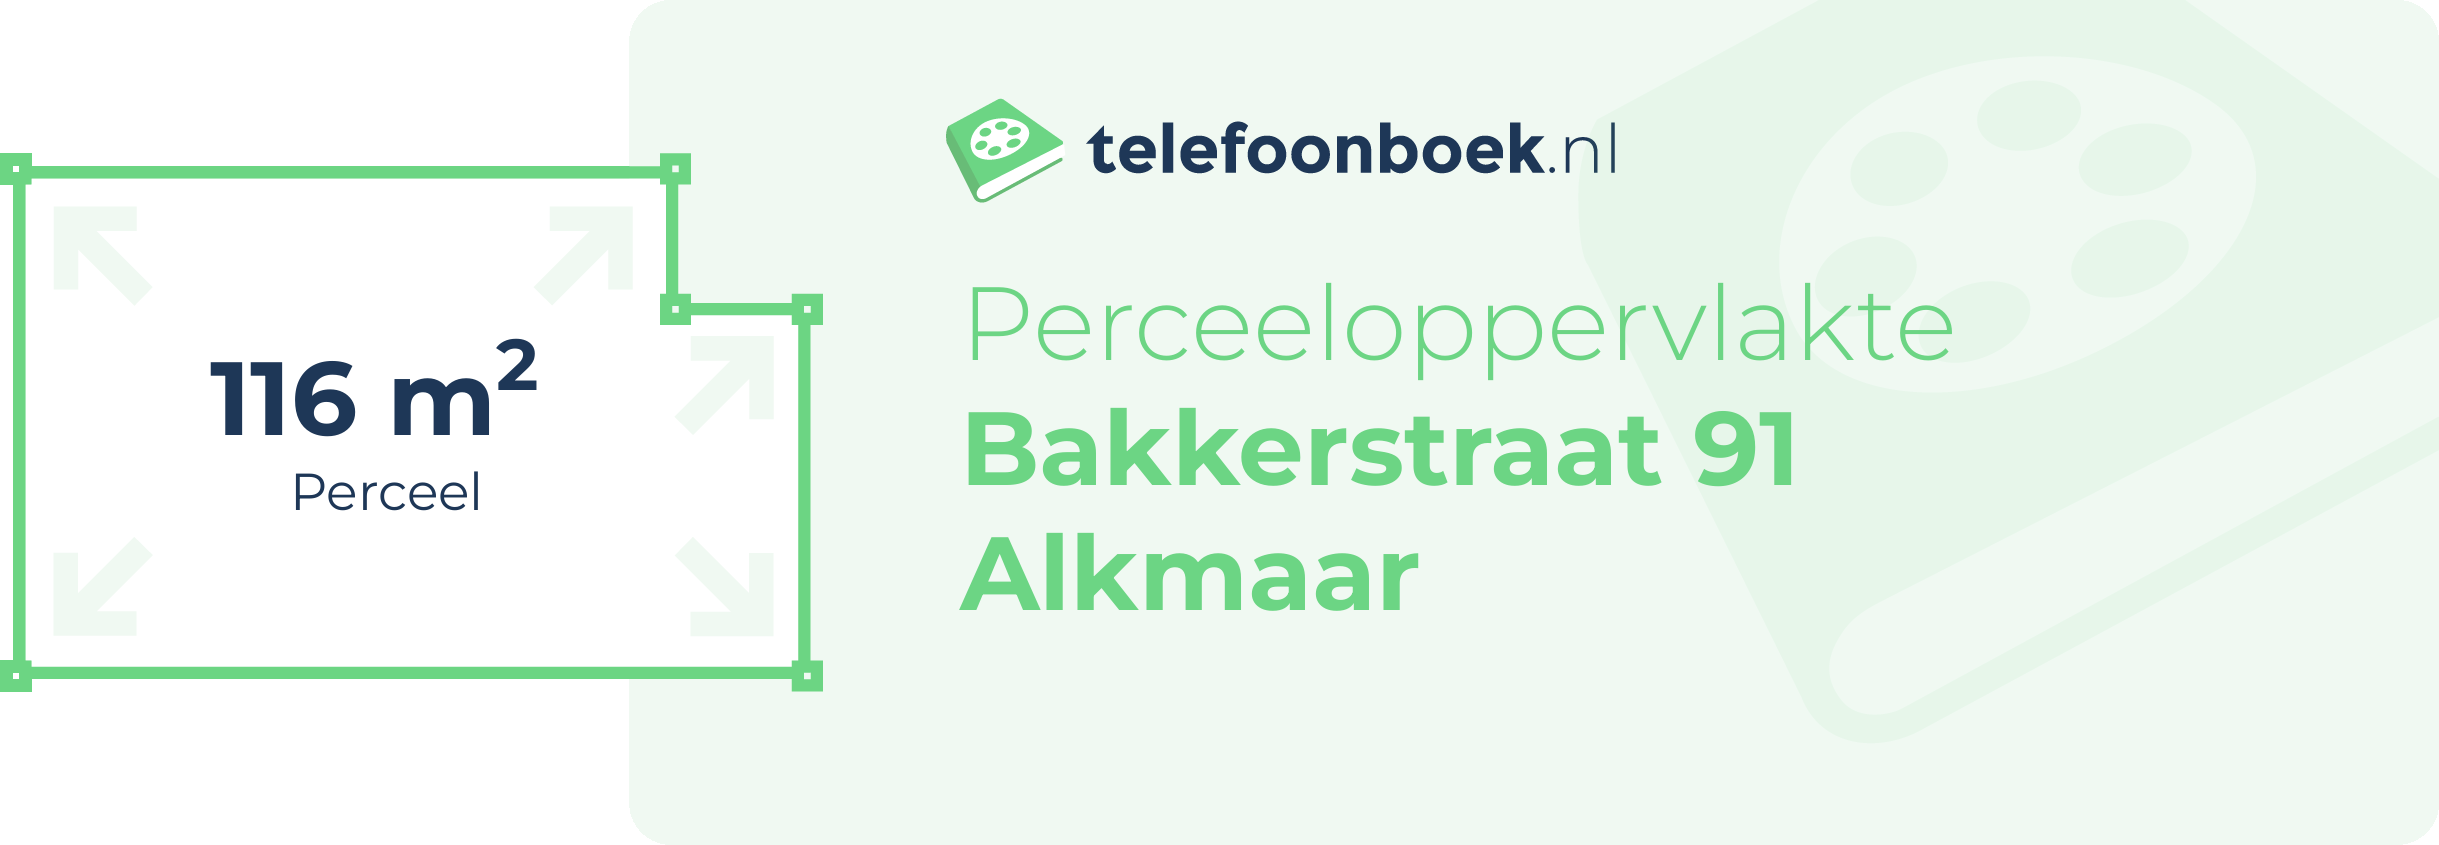 Perceeloppervlakte Bakkerstraat 91 Alkmaar